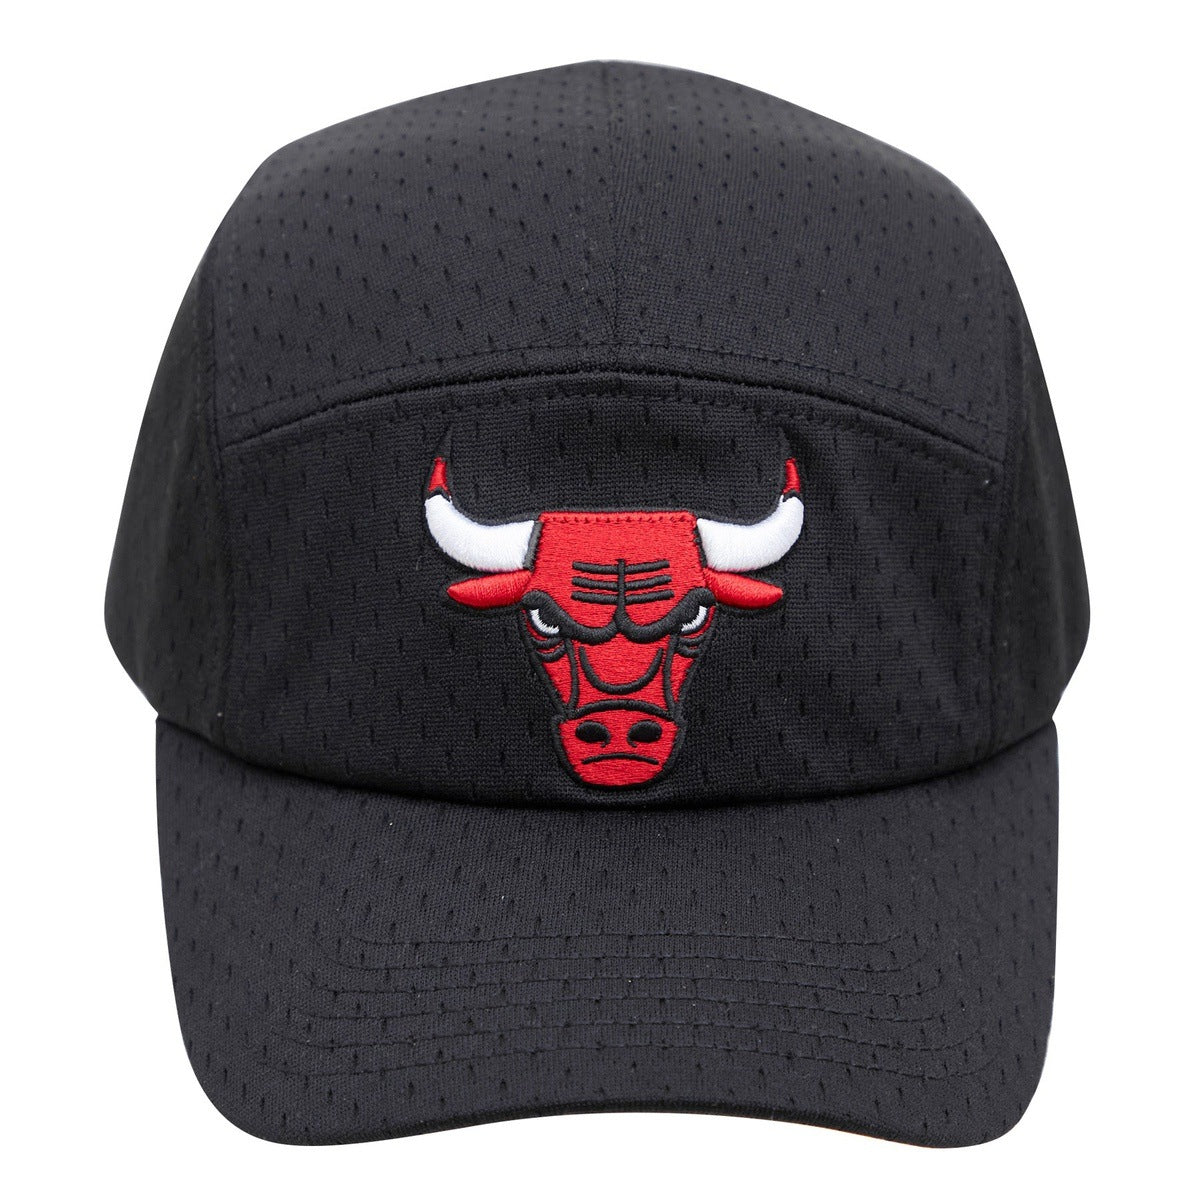 Pro Standard Mens NBA Chicago Bulls Jersey BCB153897-RED Red